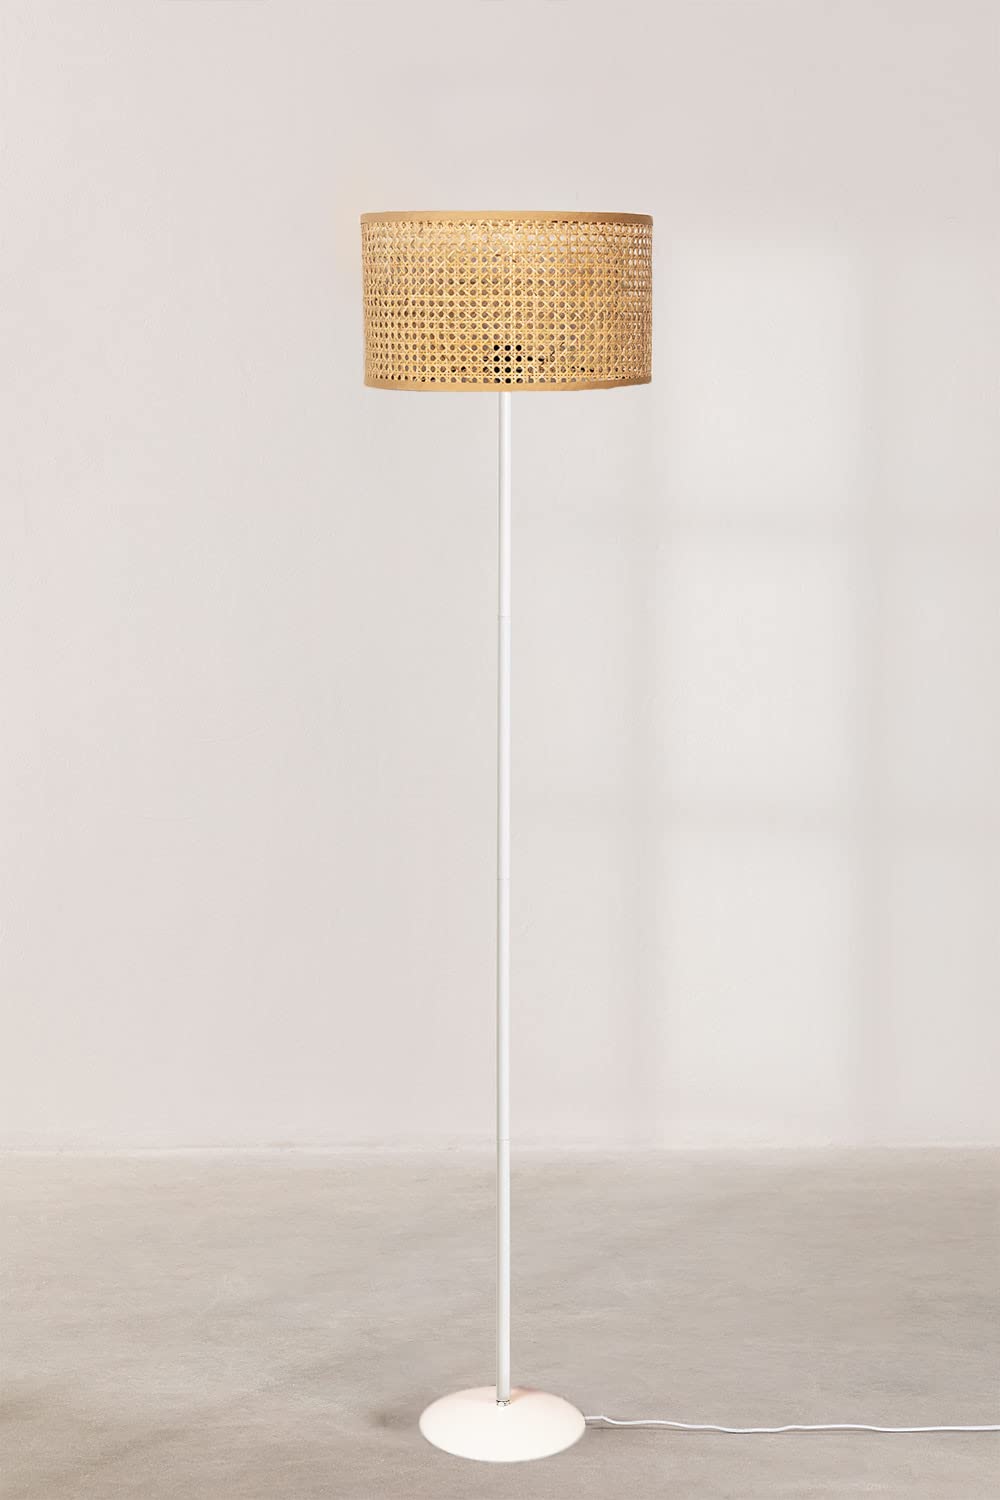 AKWAY Rattan Cane Webbing Floor Lamp Bamboo Floor Lamp Cane Floor Lamp Standing Lamp Wooden Standing lamp for Living Room Bedroom (14" D X 8")(White Stand) (Eye Webbing) - Akway